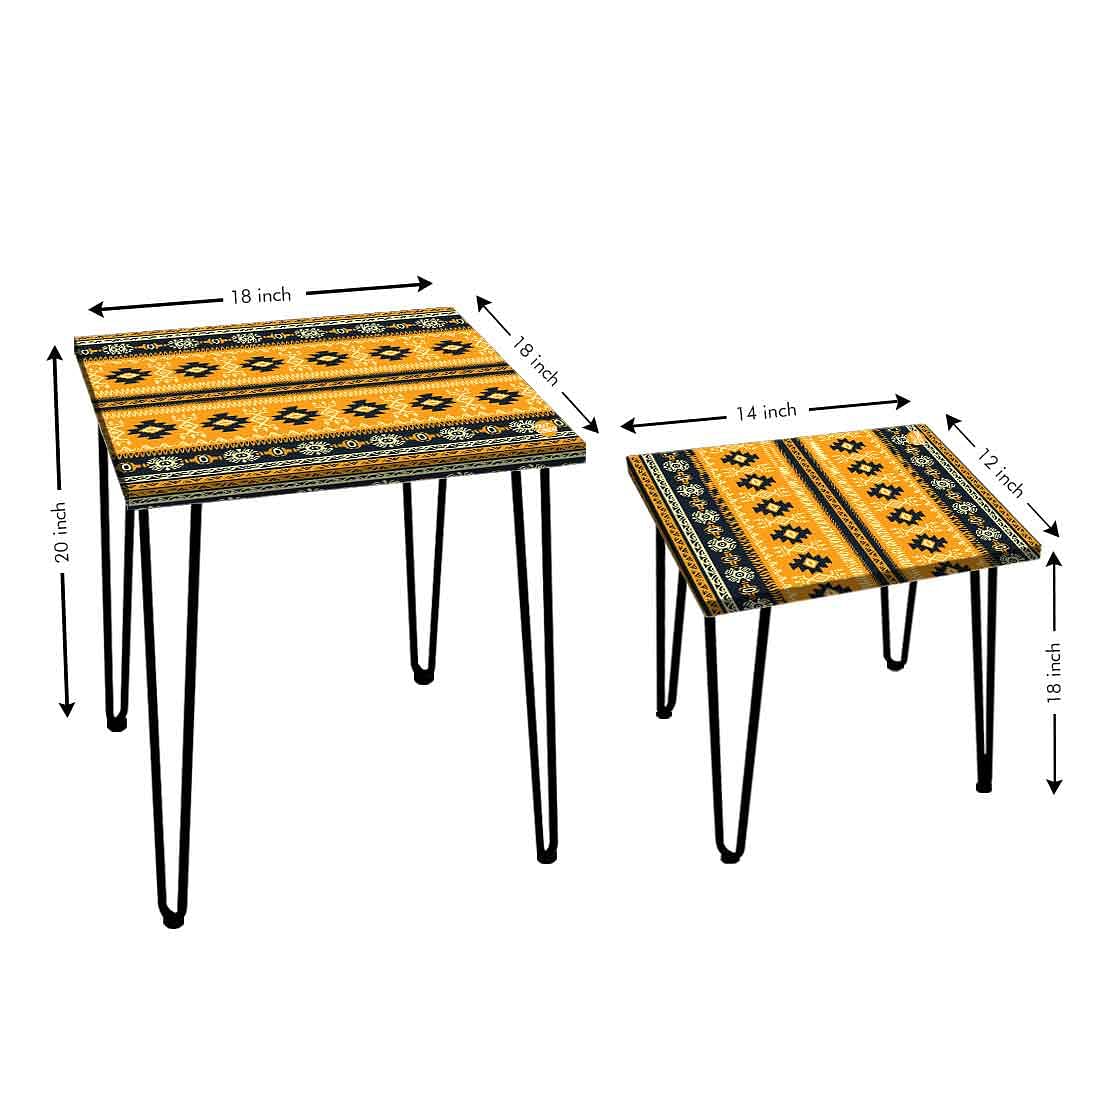 Iron Nesting Tables Set of 2 -   Ethnic Pattern Yellow Nutcase